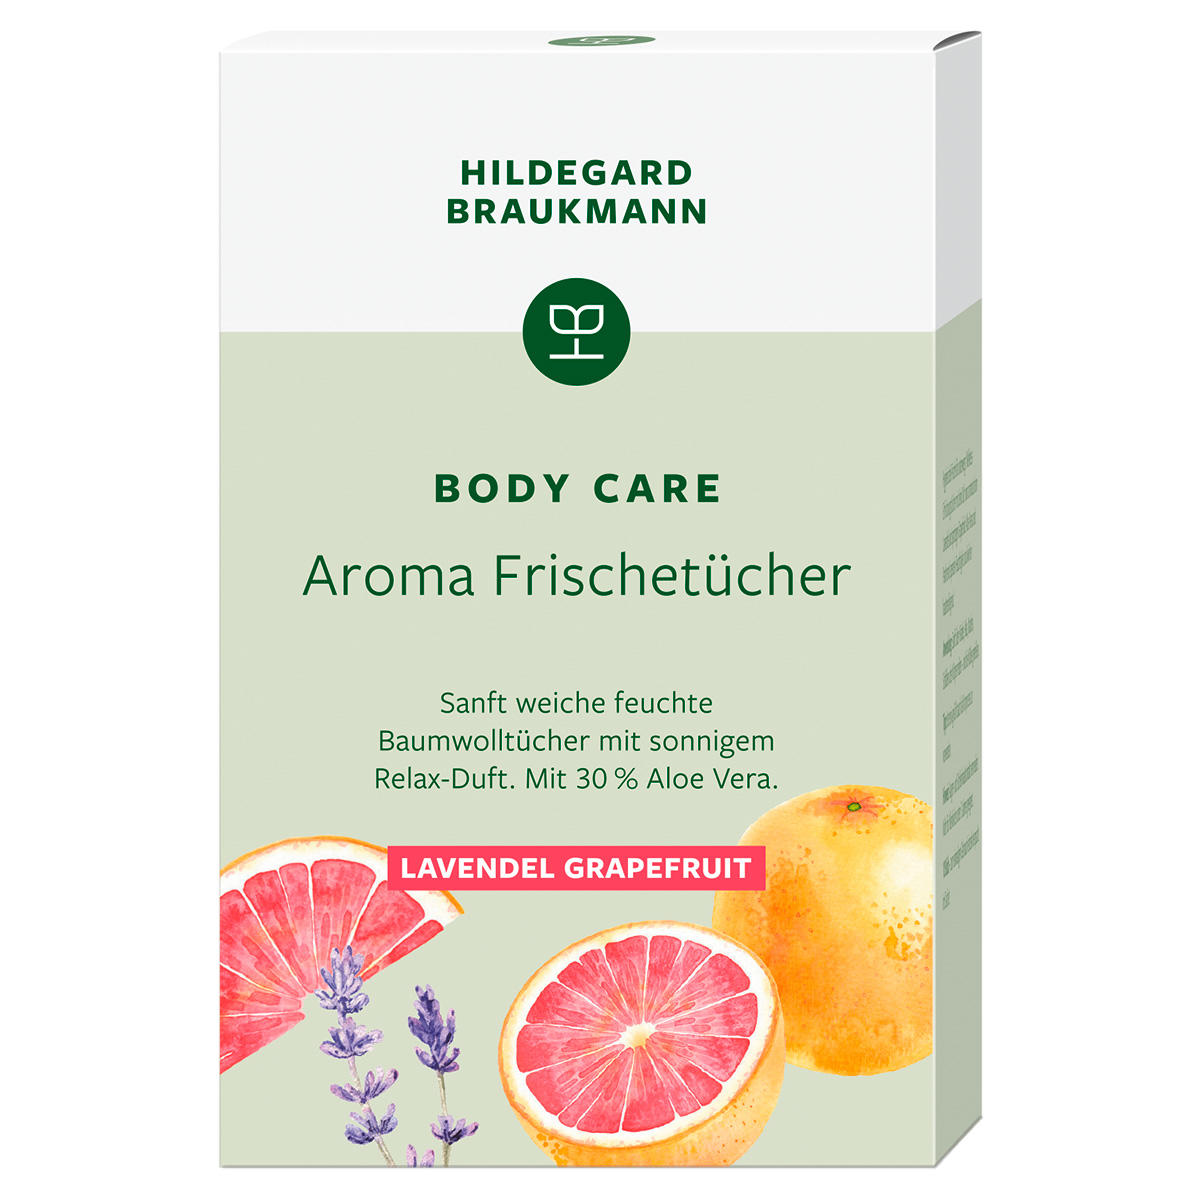 Hildegard Braukmann BODY CARE Aroma Frischetücher Lavendel Grapefruit 10 Stück - 2